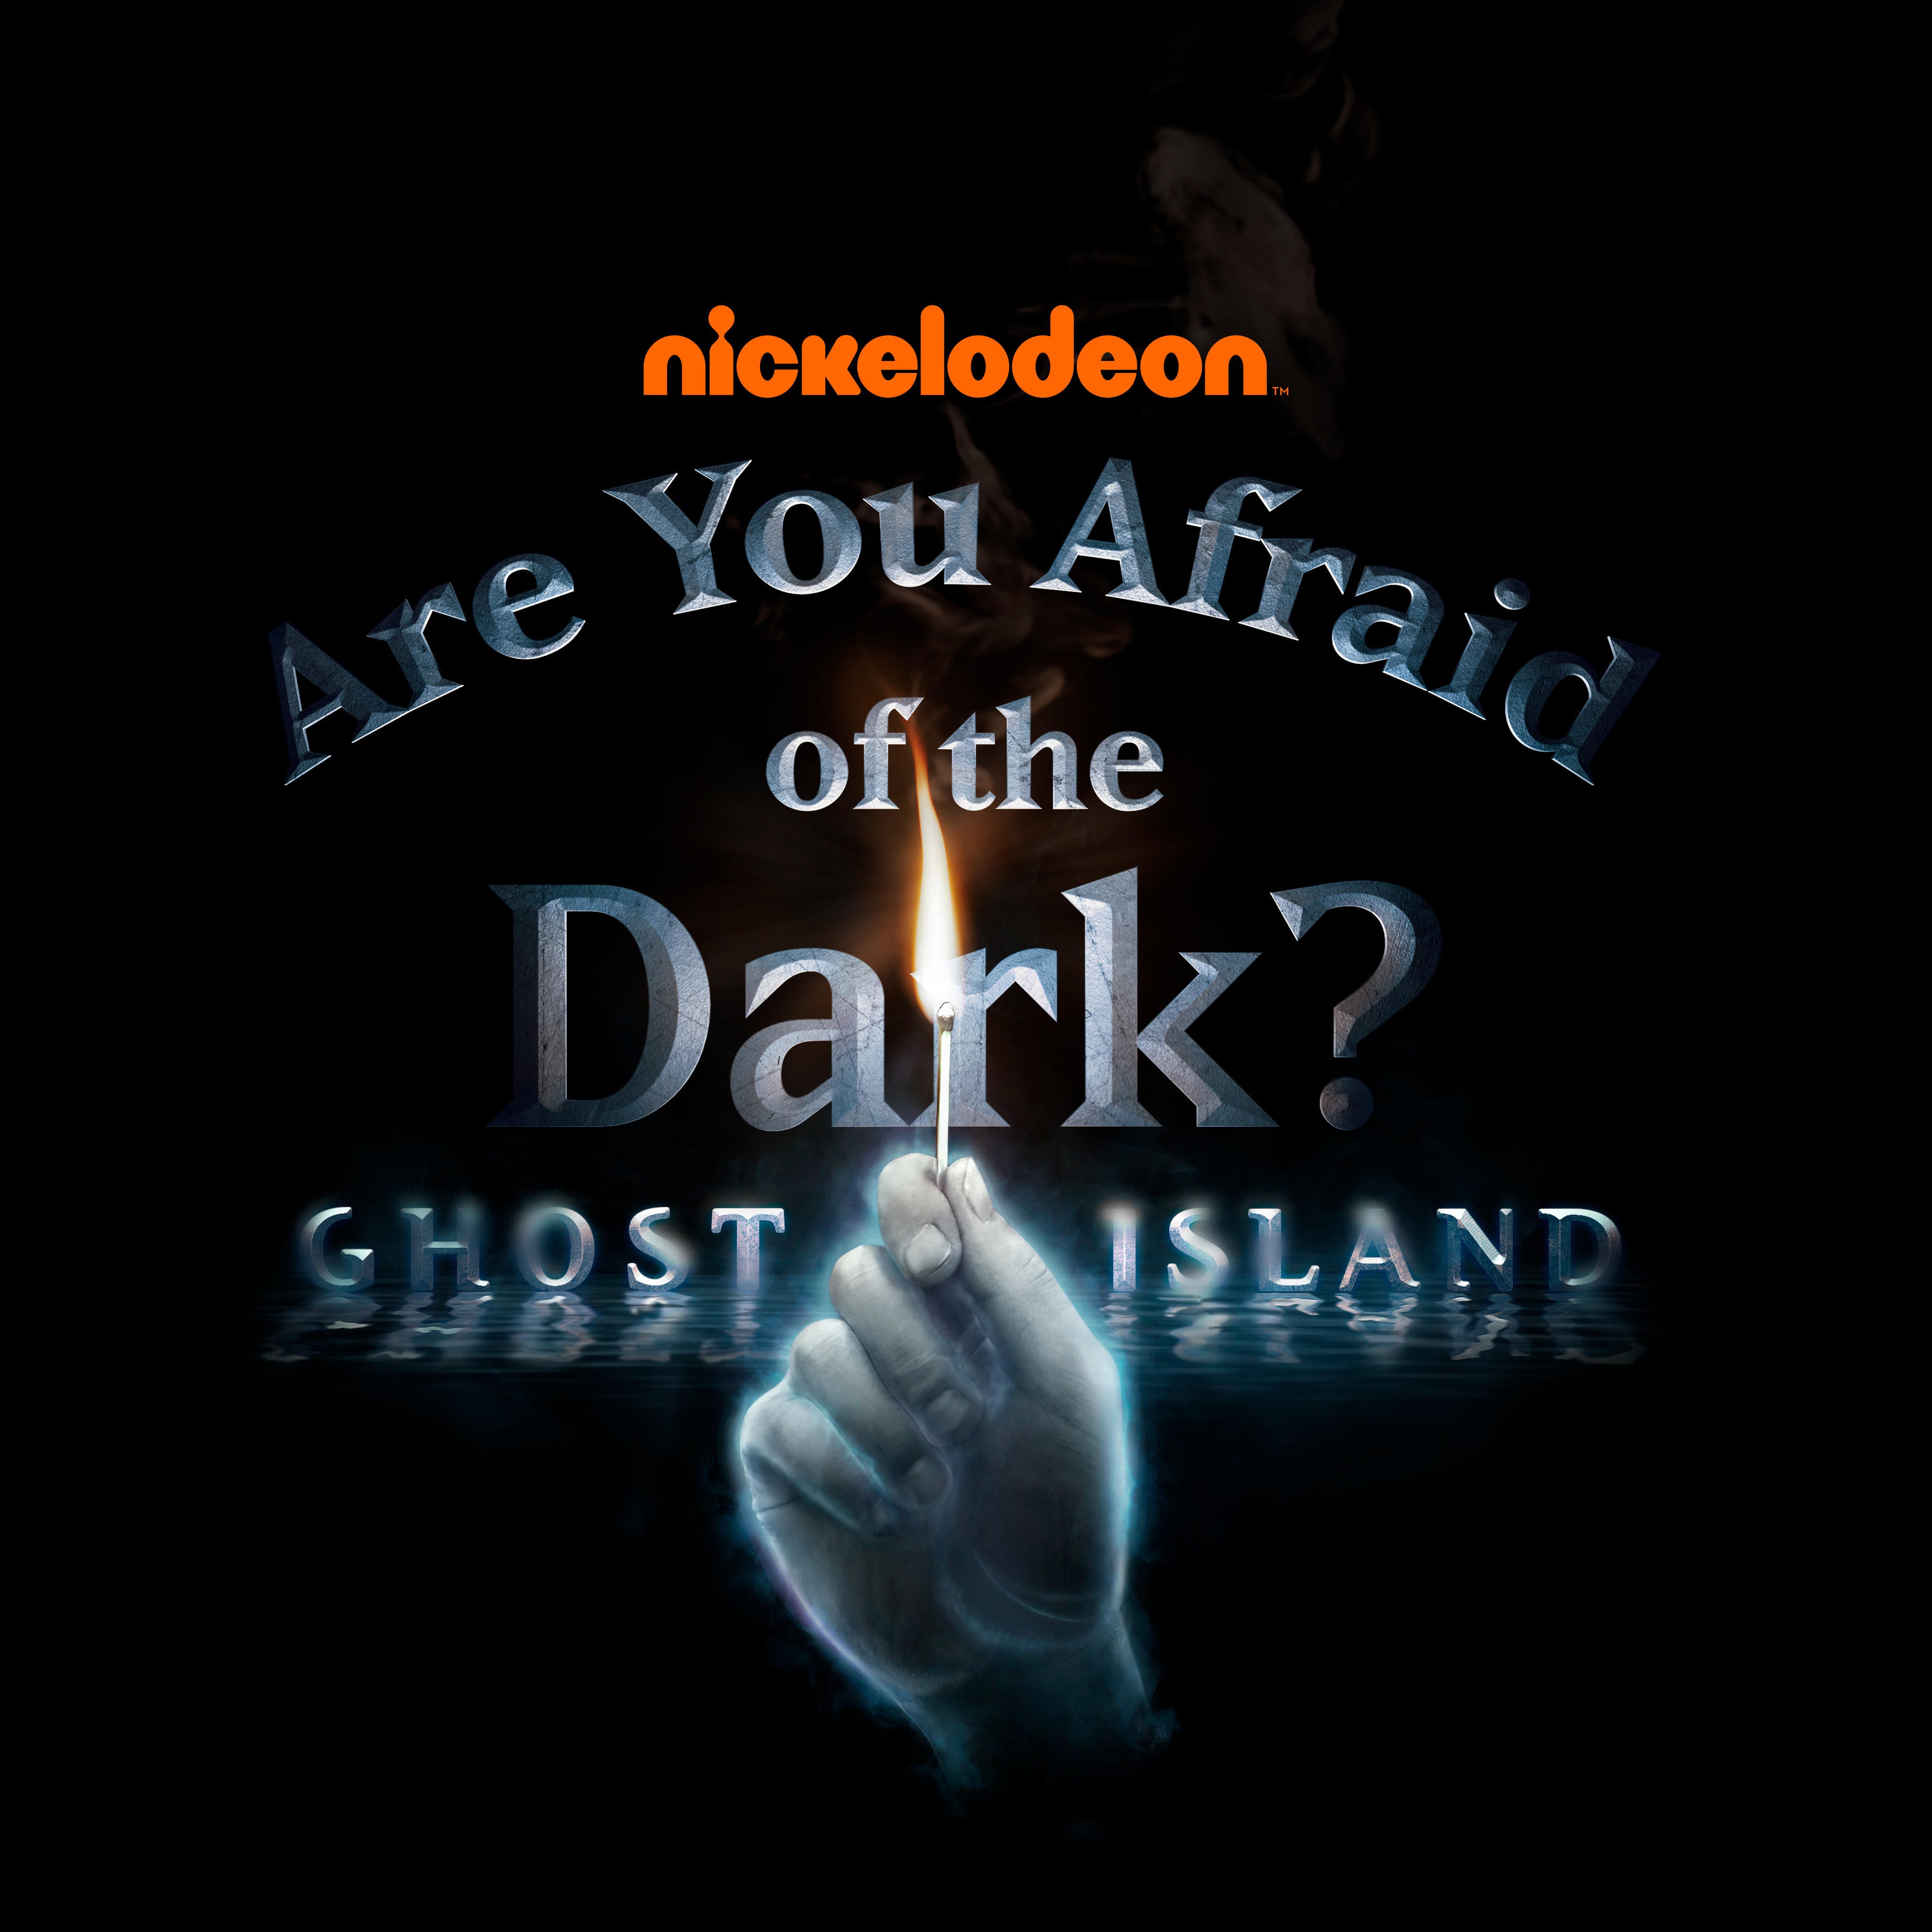 are-you-afraid-of-the-dark-ghost-island-logo.jpg